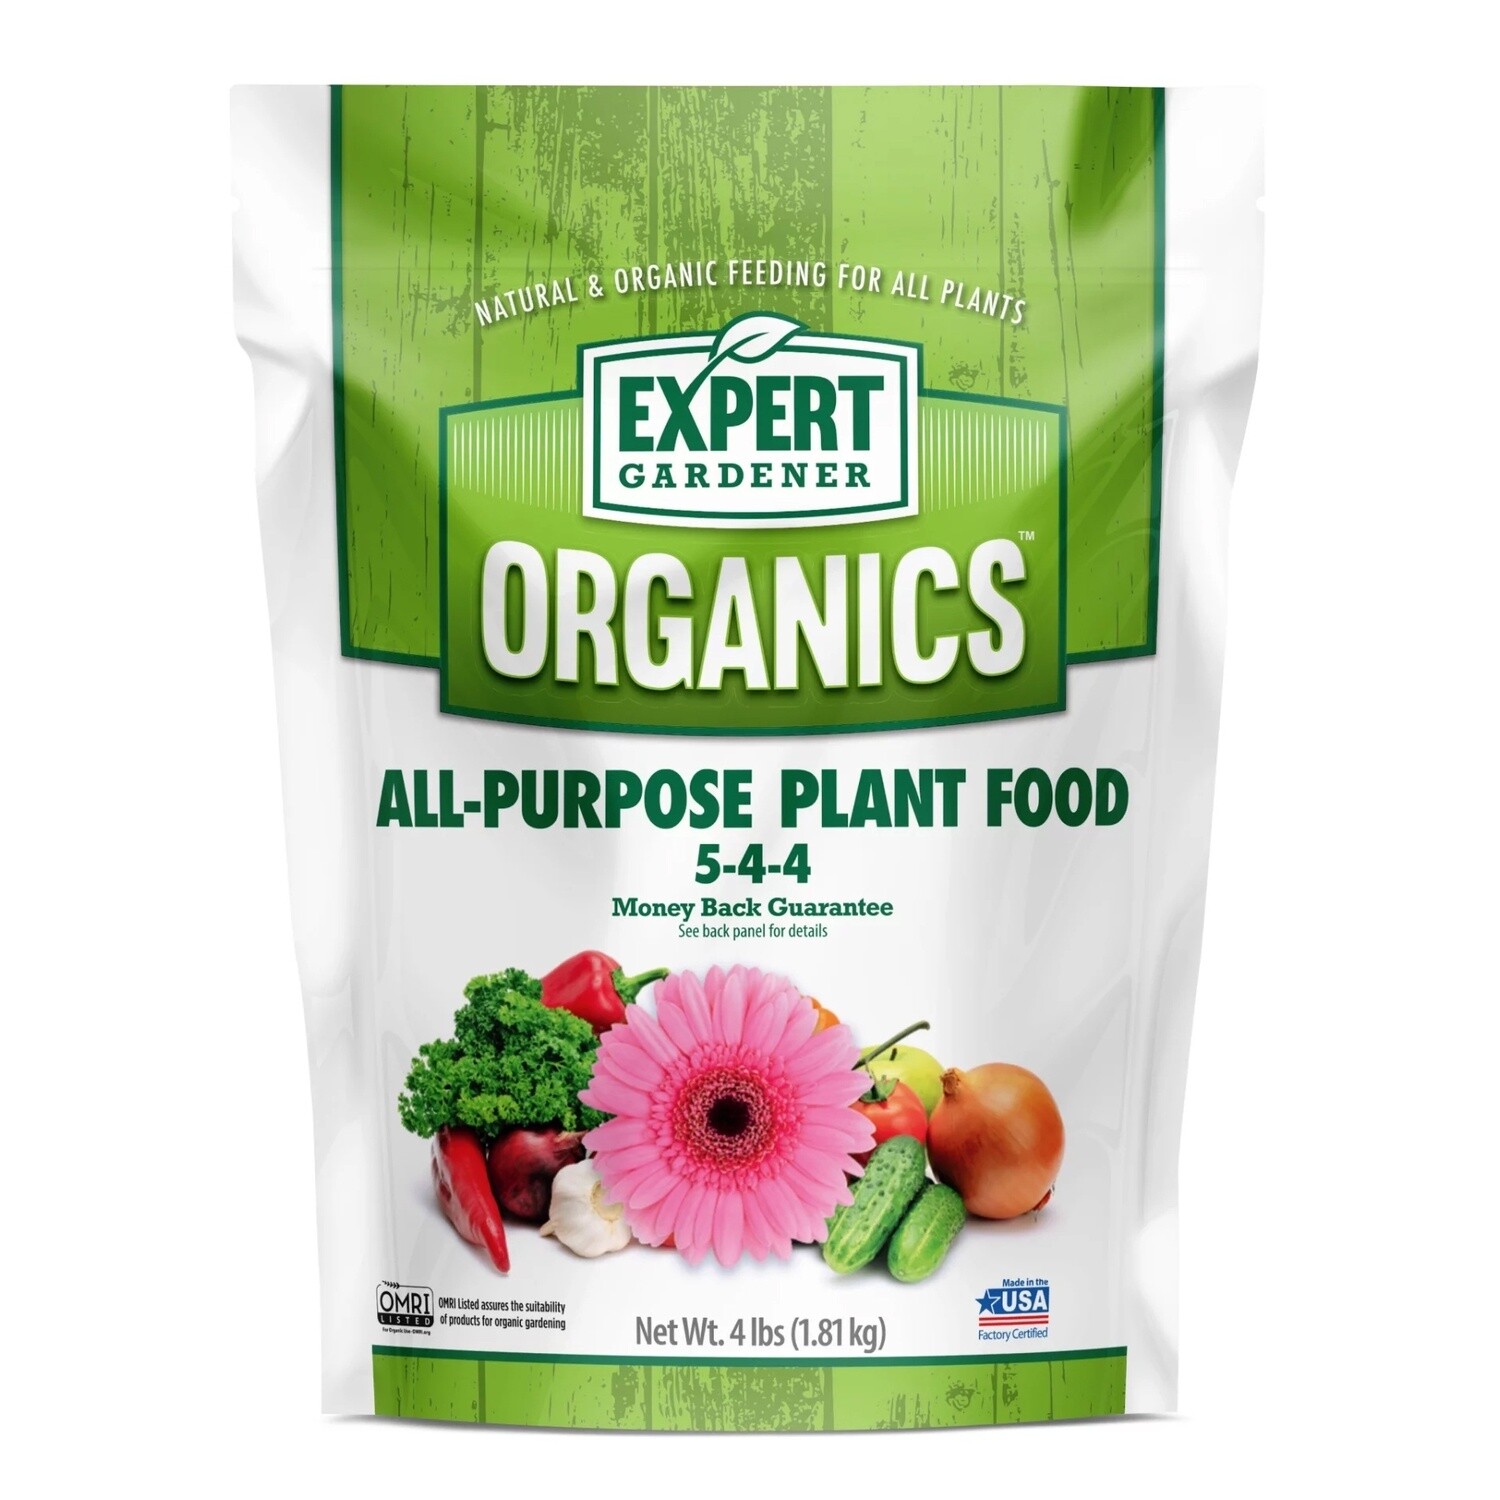 Expert Gardener Organic All-Purpose Plant Food Fertilizer 4 lb